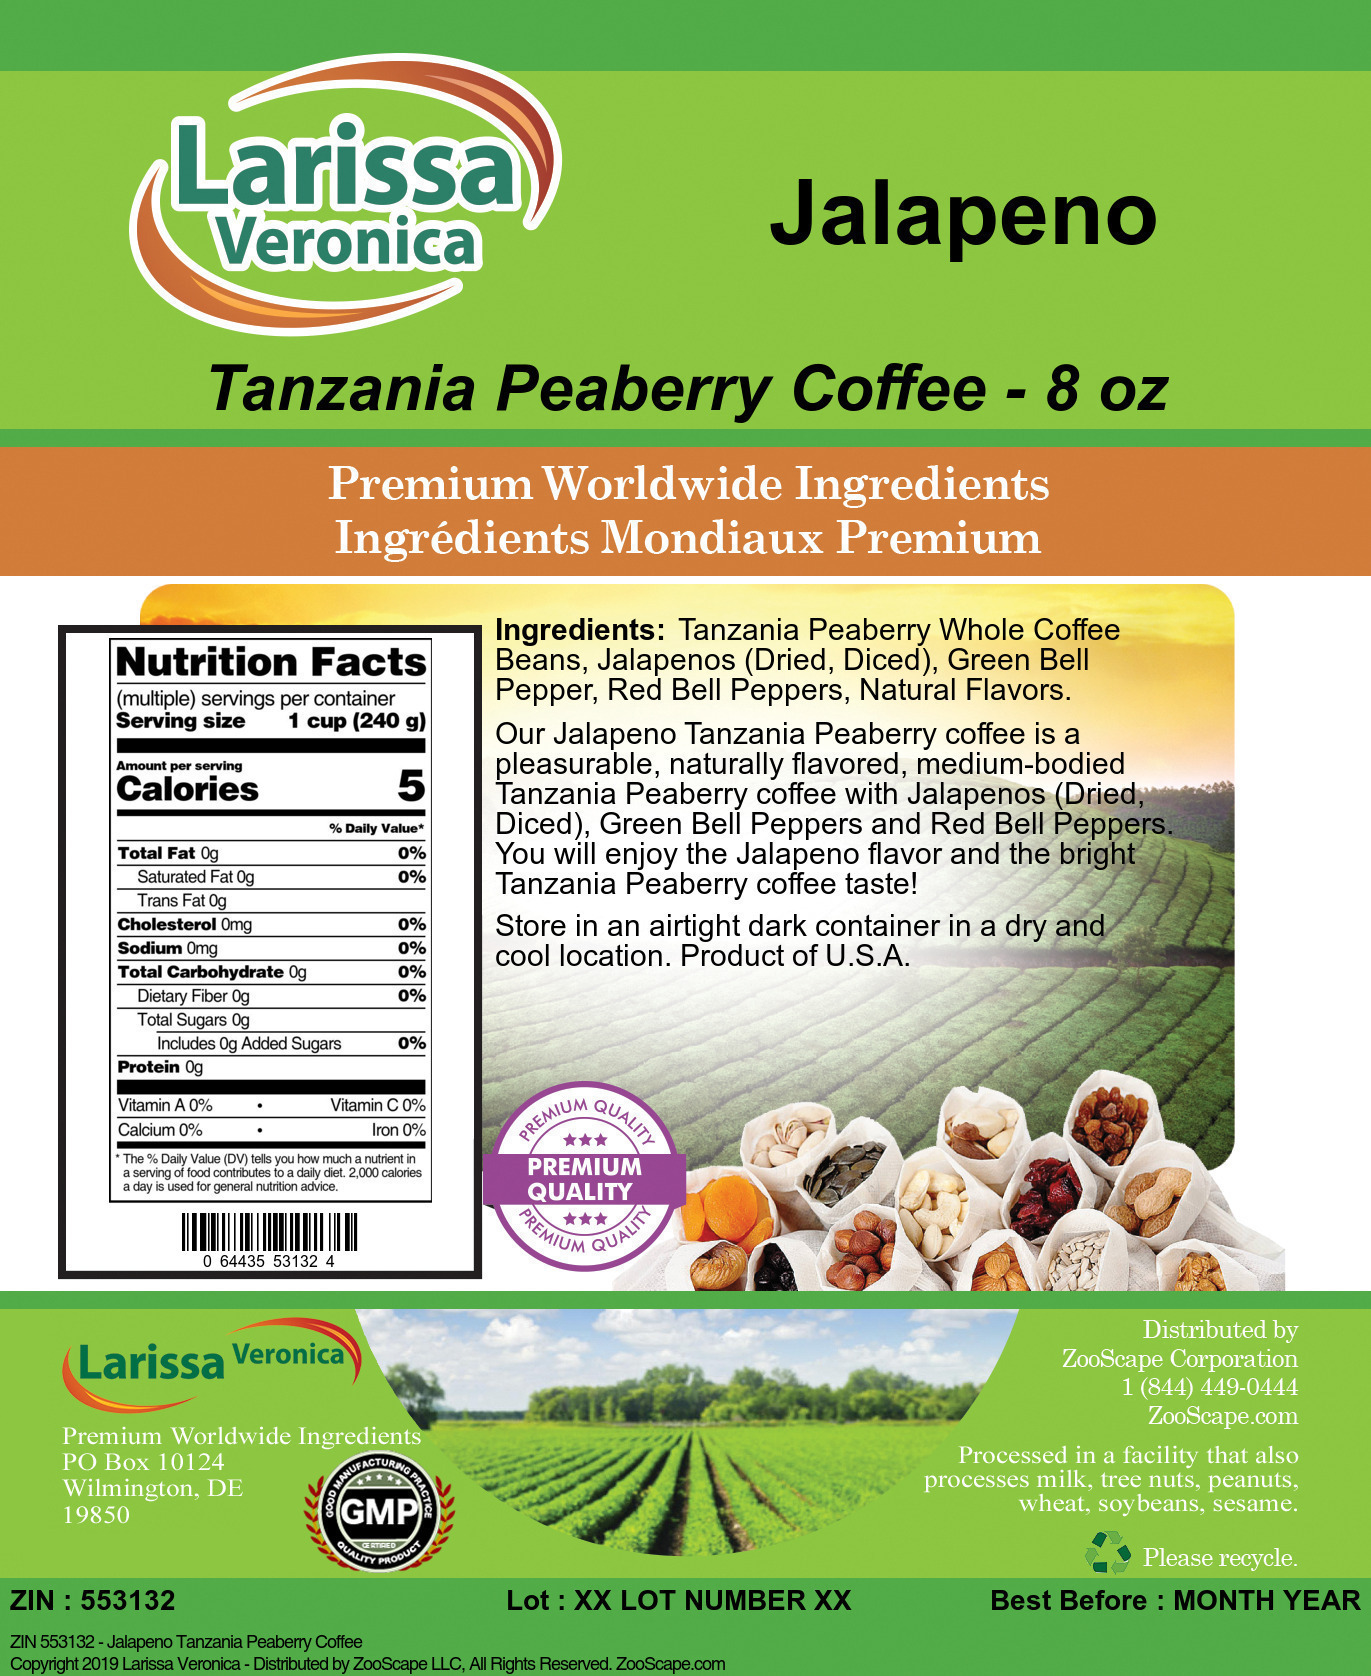 Jalapeno Tanzania Peaberry Coffee - Label